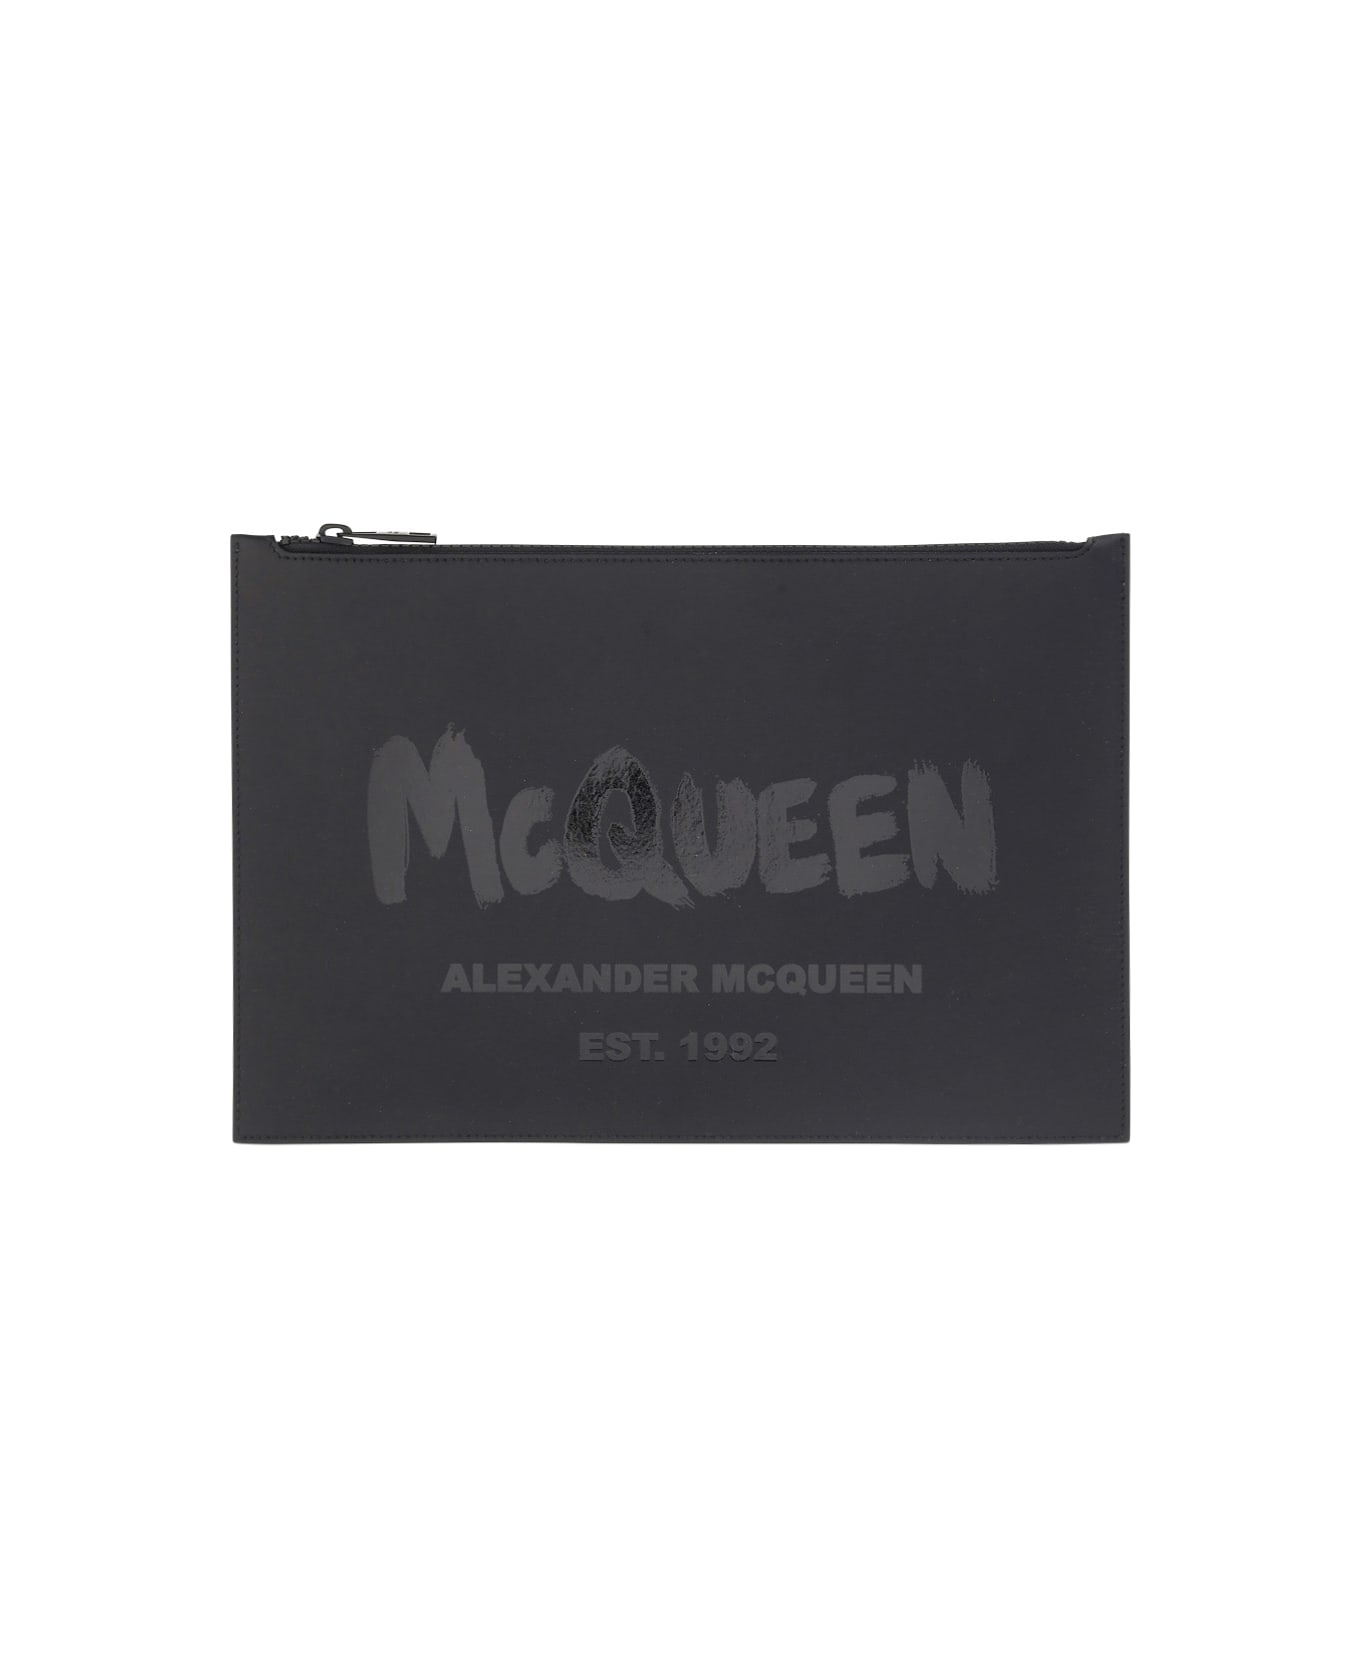 Alexander McQueen Pouch